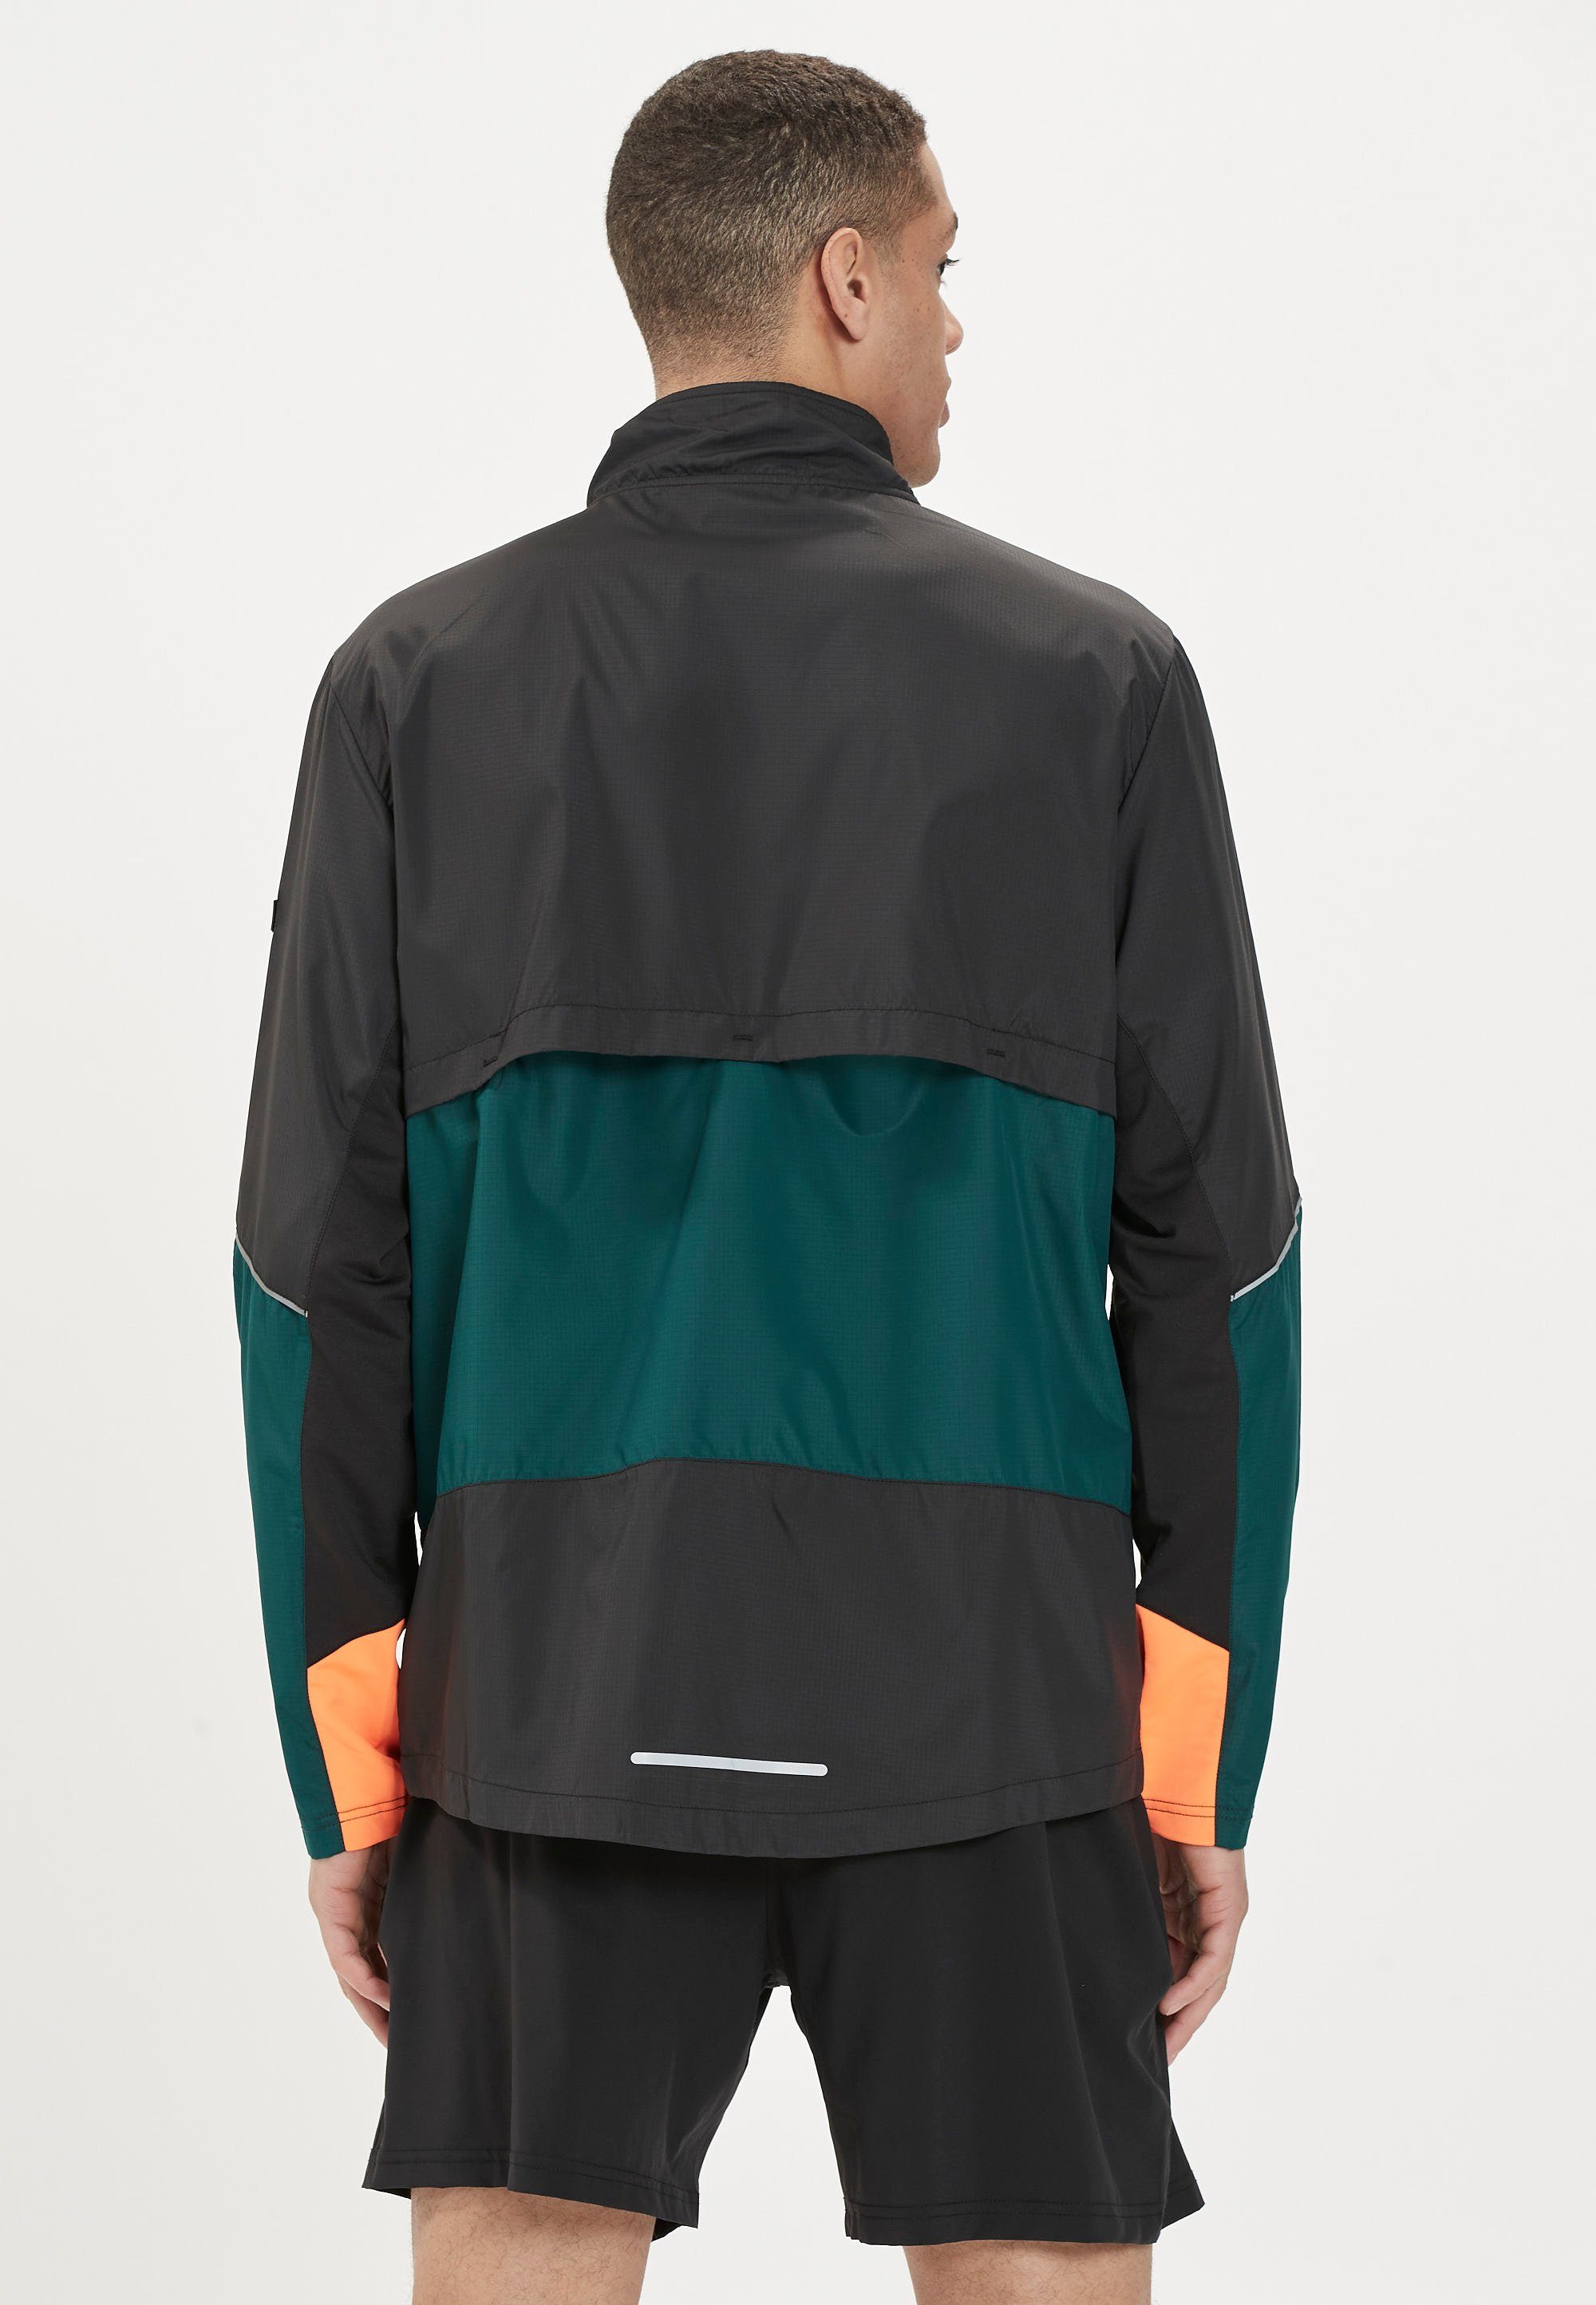 ENDURANCE Laufjacke NOVANT Jacket mit Details M reflektierenden dunkelgrün Functional